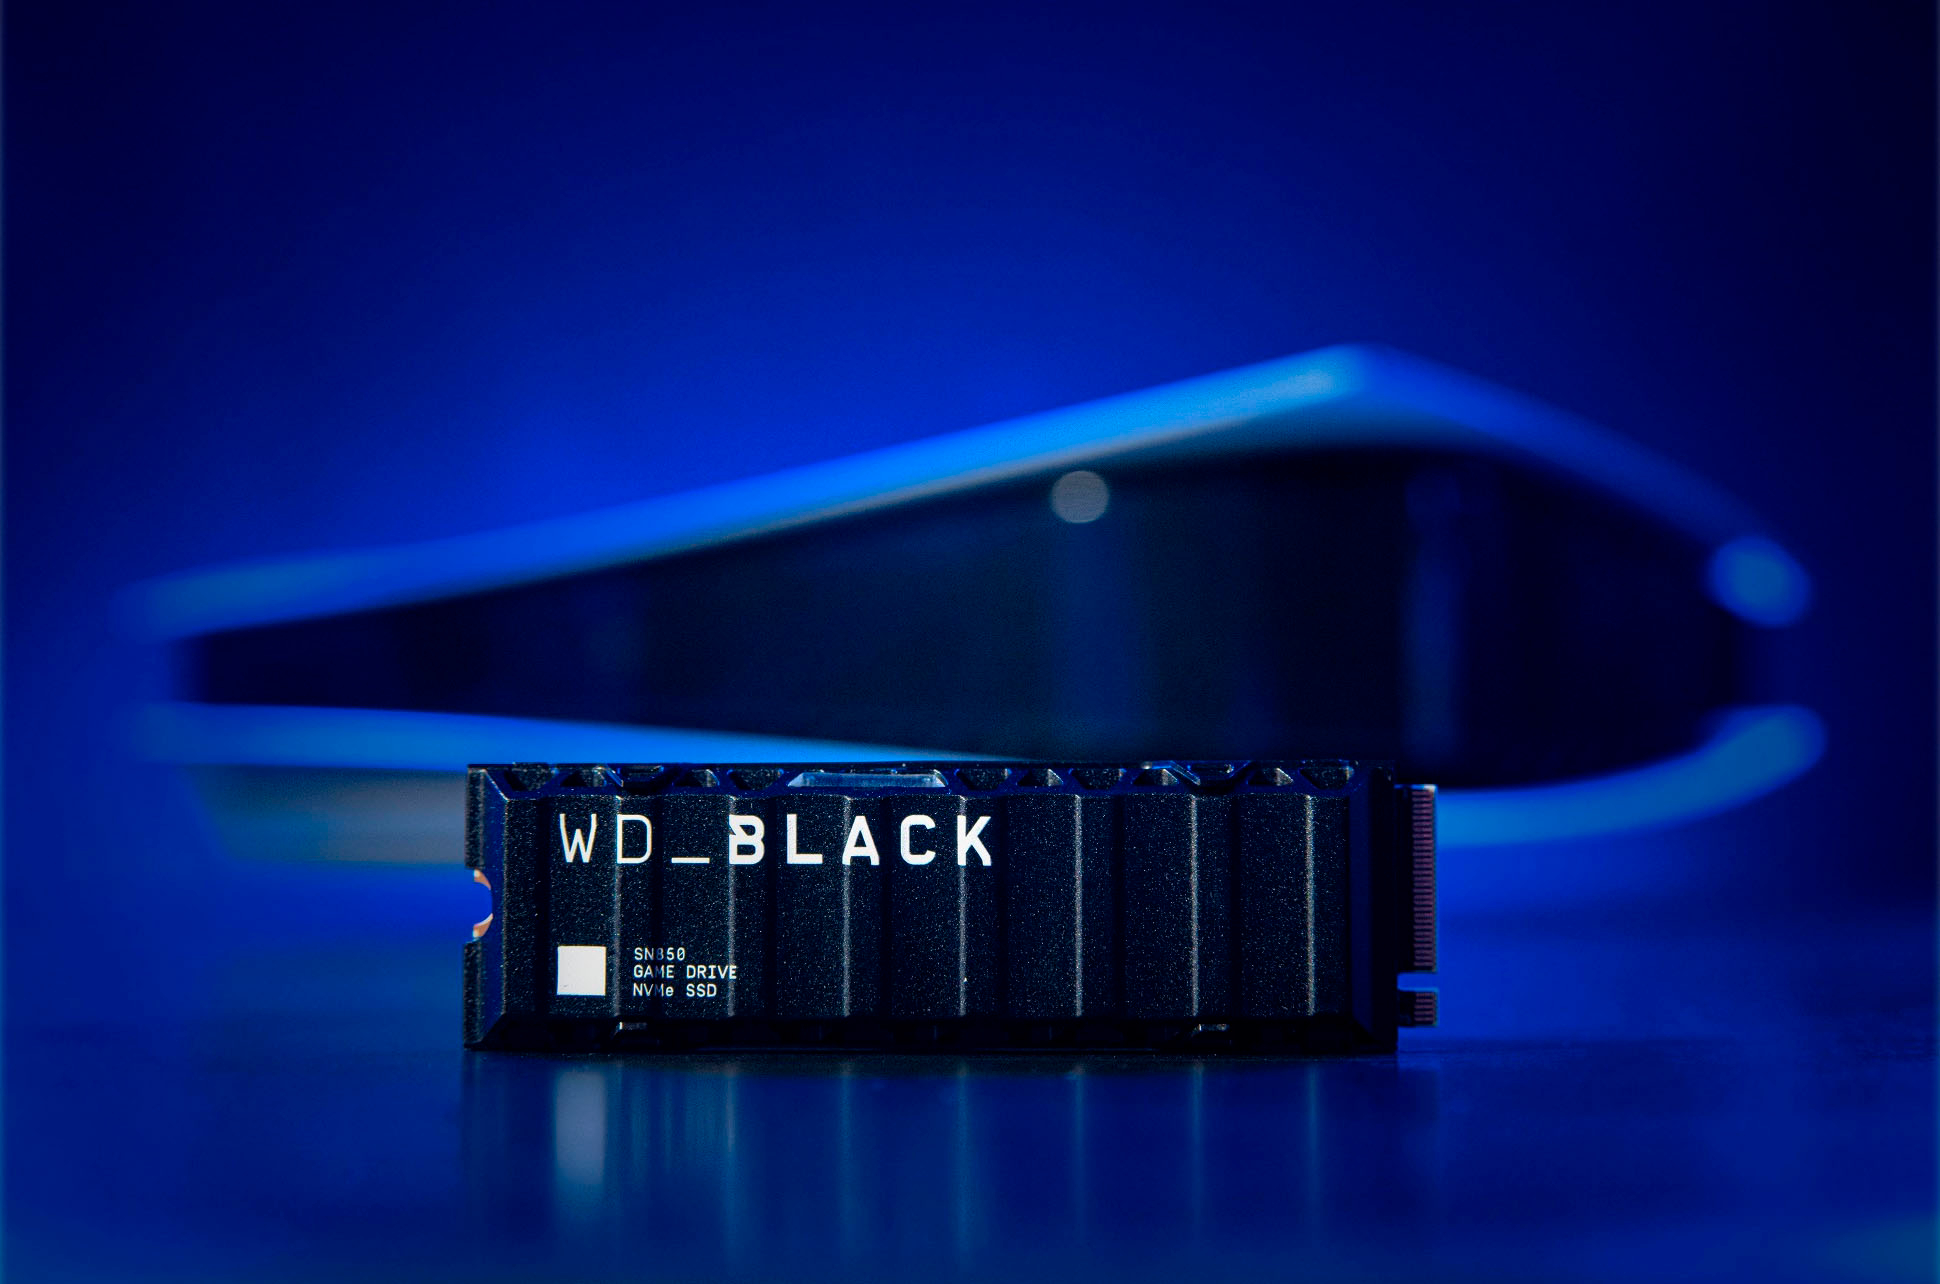 WD BLACK SN850P 1TB Internal SSD PCIe Gen 4 x4 with Heatsink for PS5  WDBBYV0010BNC-WRSN - Best Buy